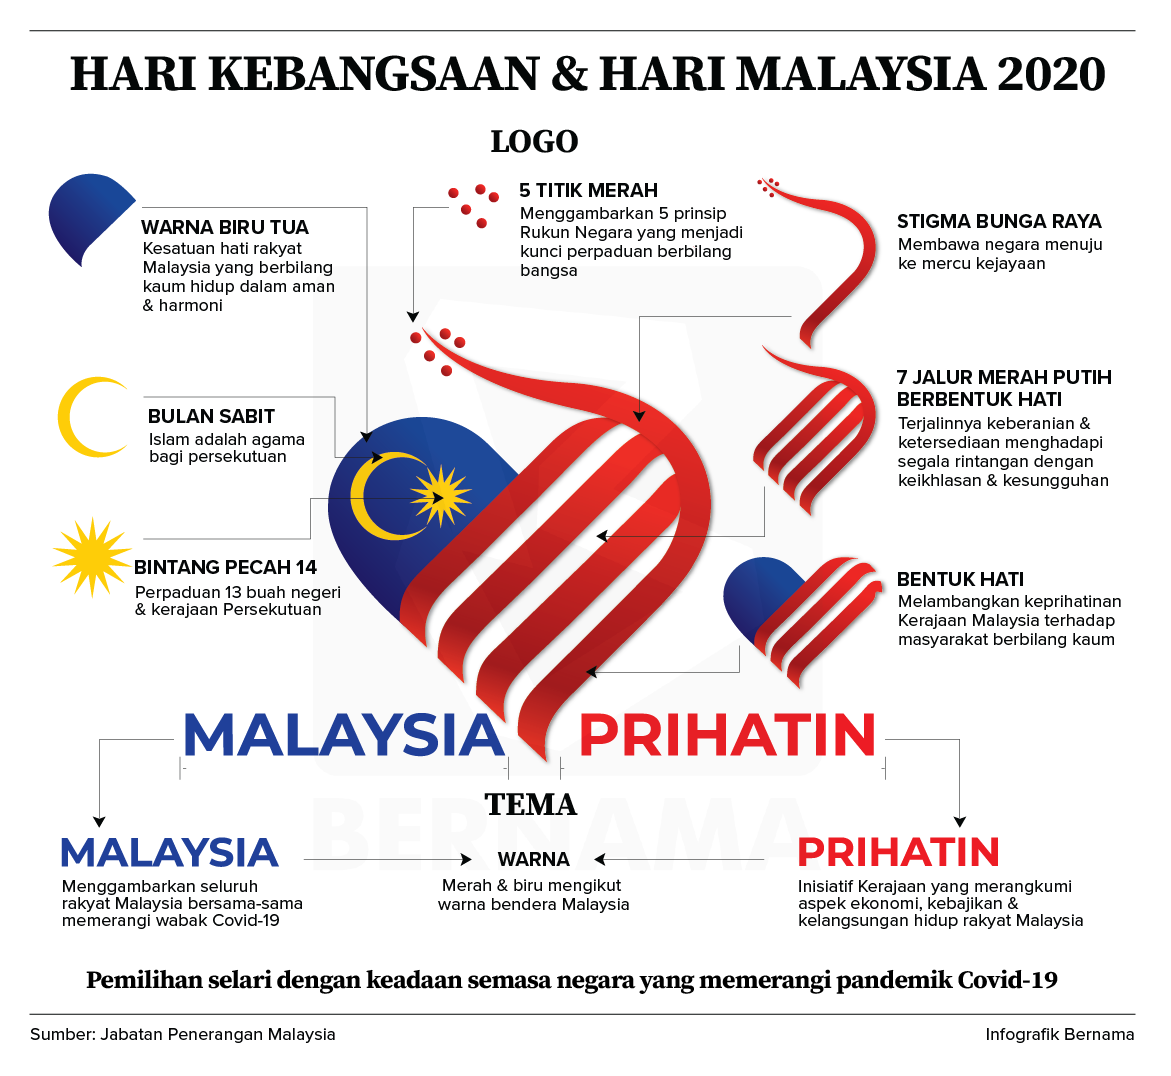 Bernama V Twitter Infografik Logo Hari Kebangsaan Hari Malaysia 2020 Infographics National Day Malaysia Day 2020 Logo Malaysiaprihatin Merdekamoment Malaysiakumerdeka Kibarjalurgemilang Https T Co Wz6ykea7kl